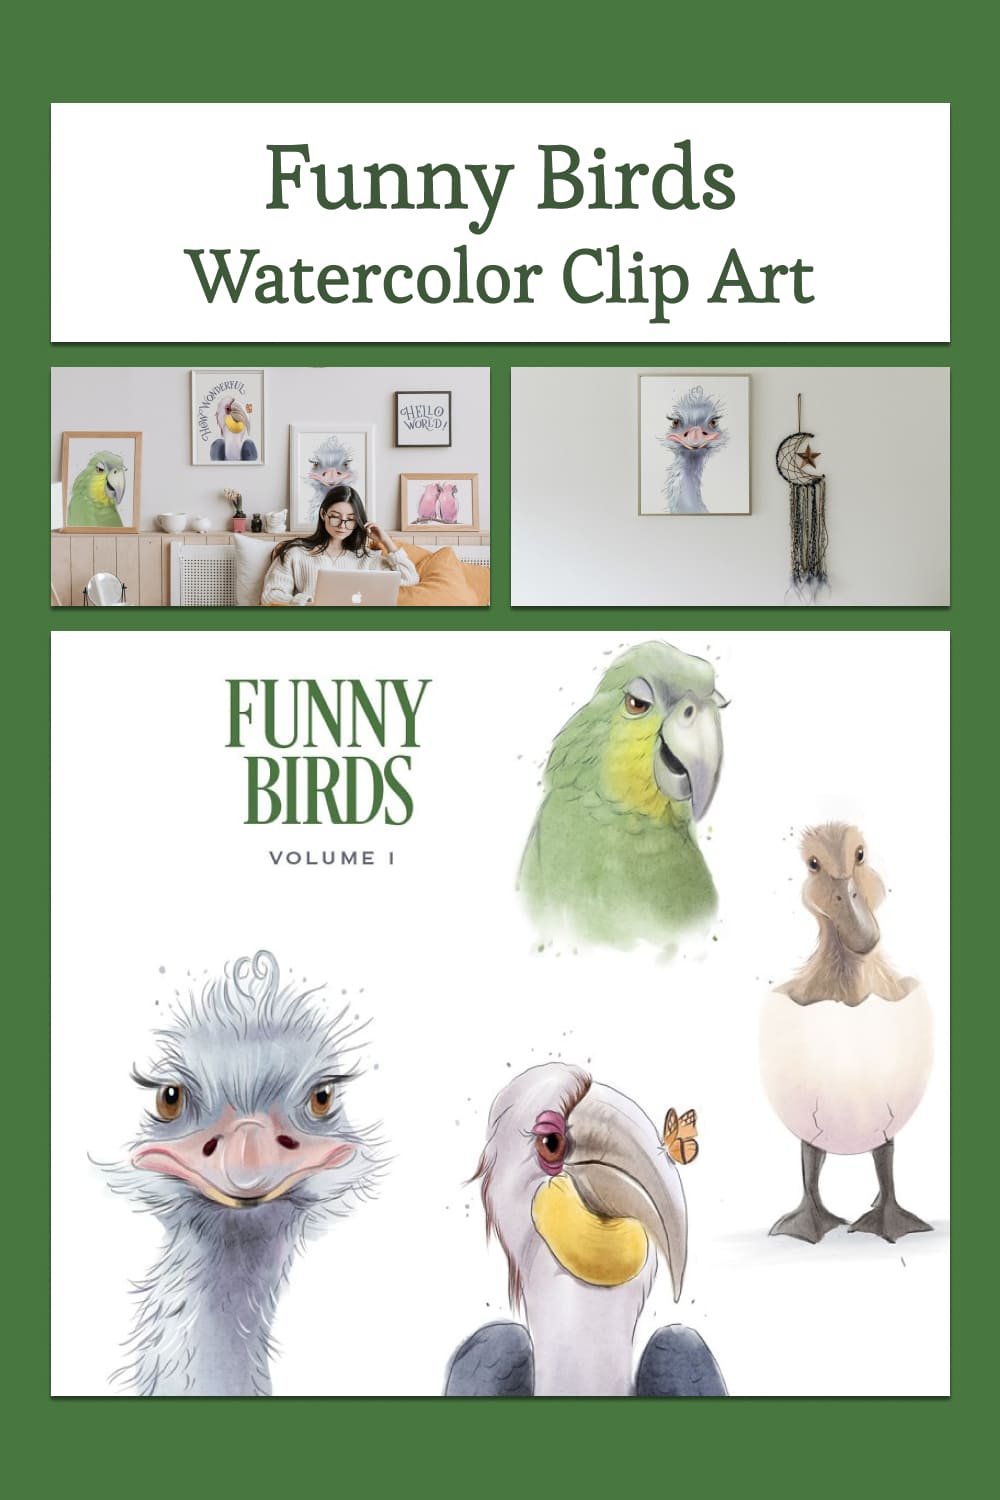 Funny birds. Watercolor clip art - pinterest image preview.